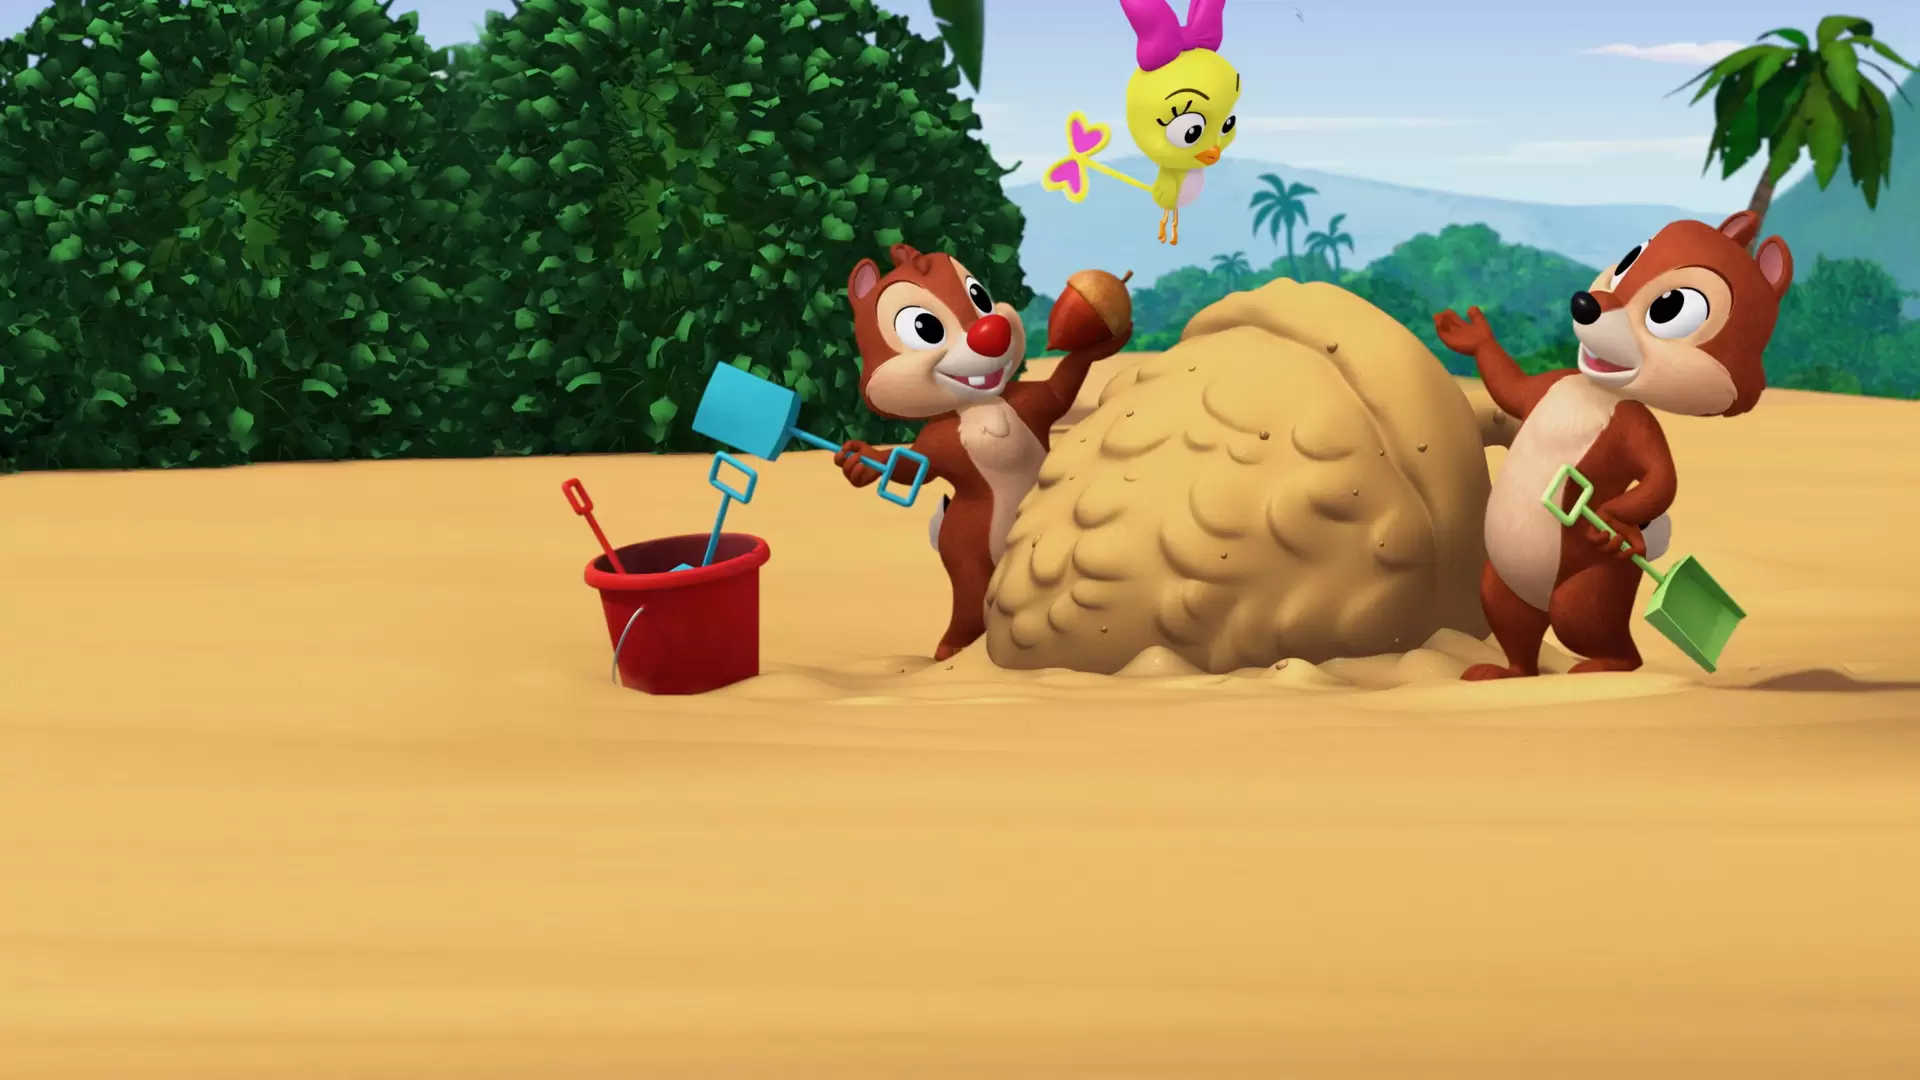 دانلود انیمیشن Chip ‘n Dale’s Nutty Tales 2017